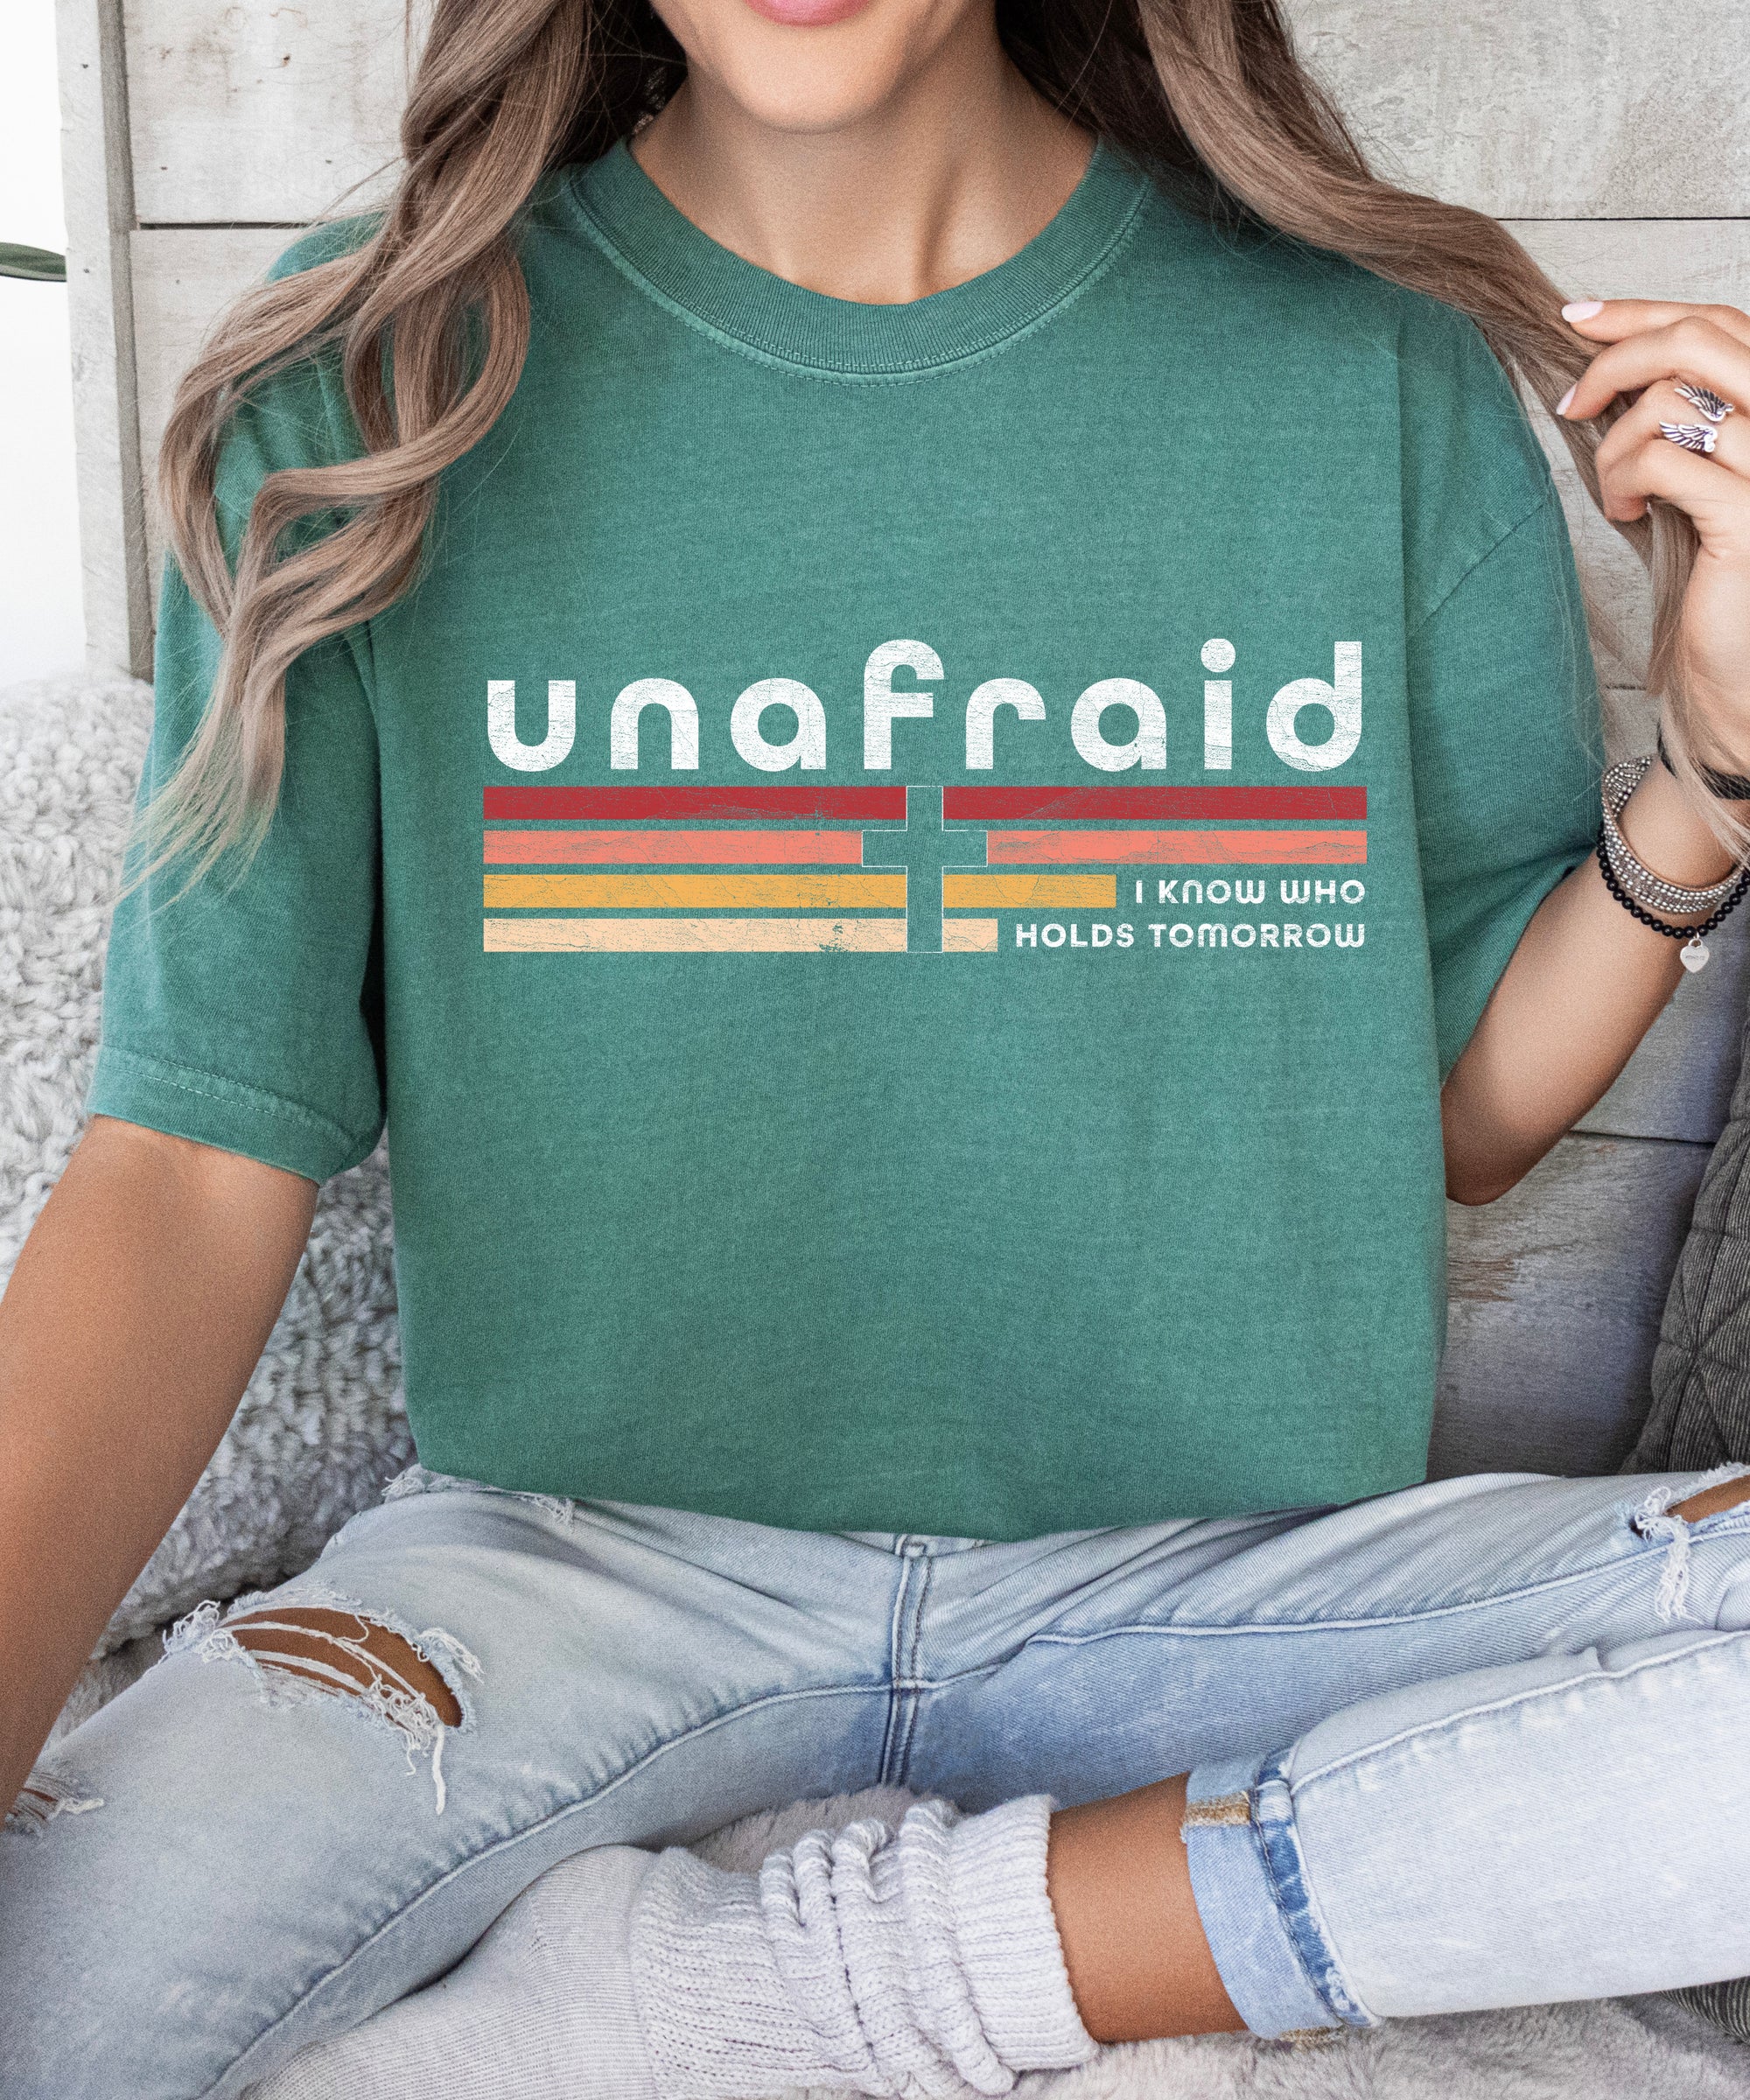 Unafraid (I know who holds tomorrow) T-Shirt